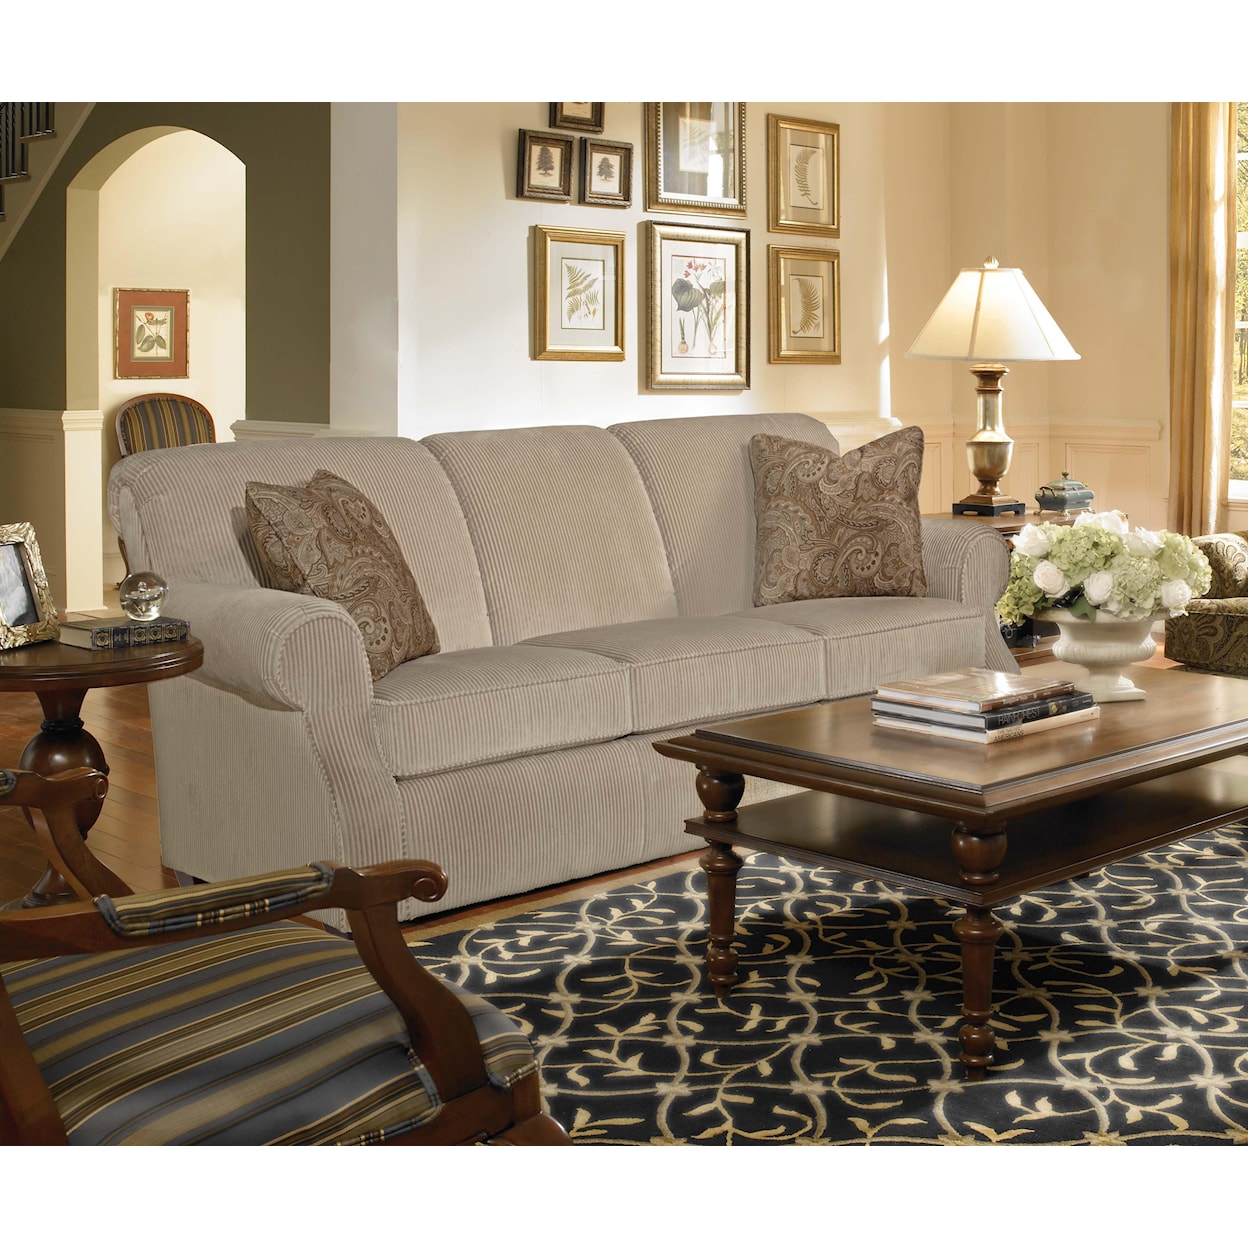 Kincaid Furniture Lynchburg Sofa